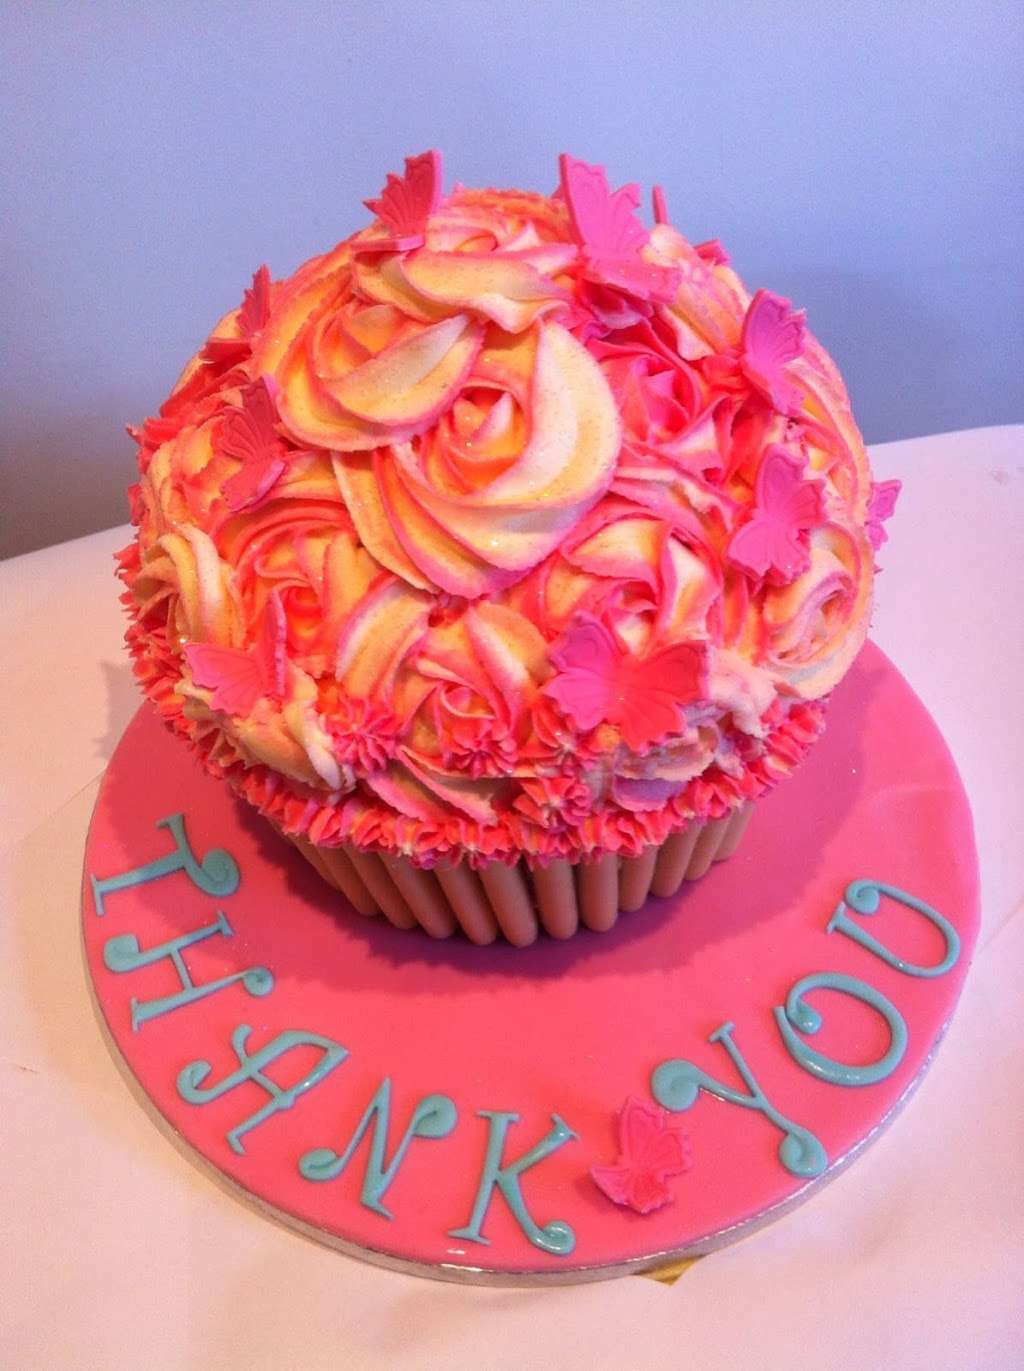 BellaBoos Cupcake | 9 Phillips Cl, Crawley RH10 7NP, UK | Phone: 07905 394028